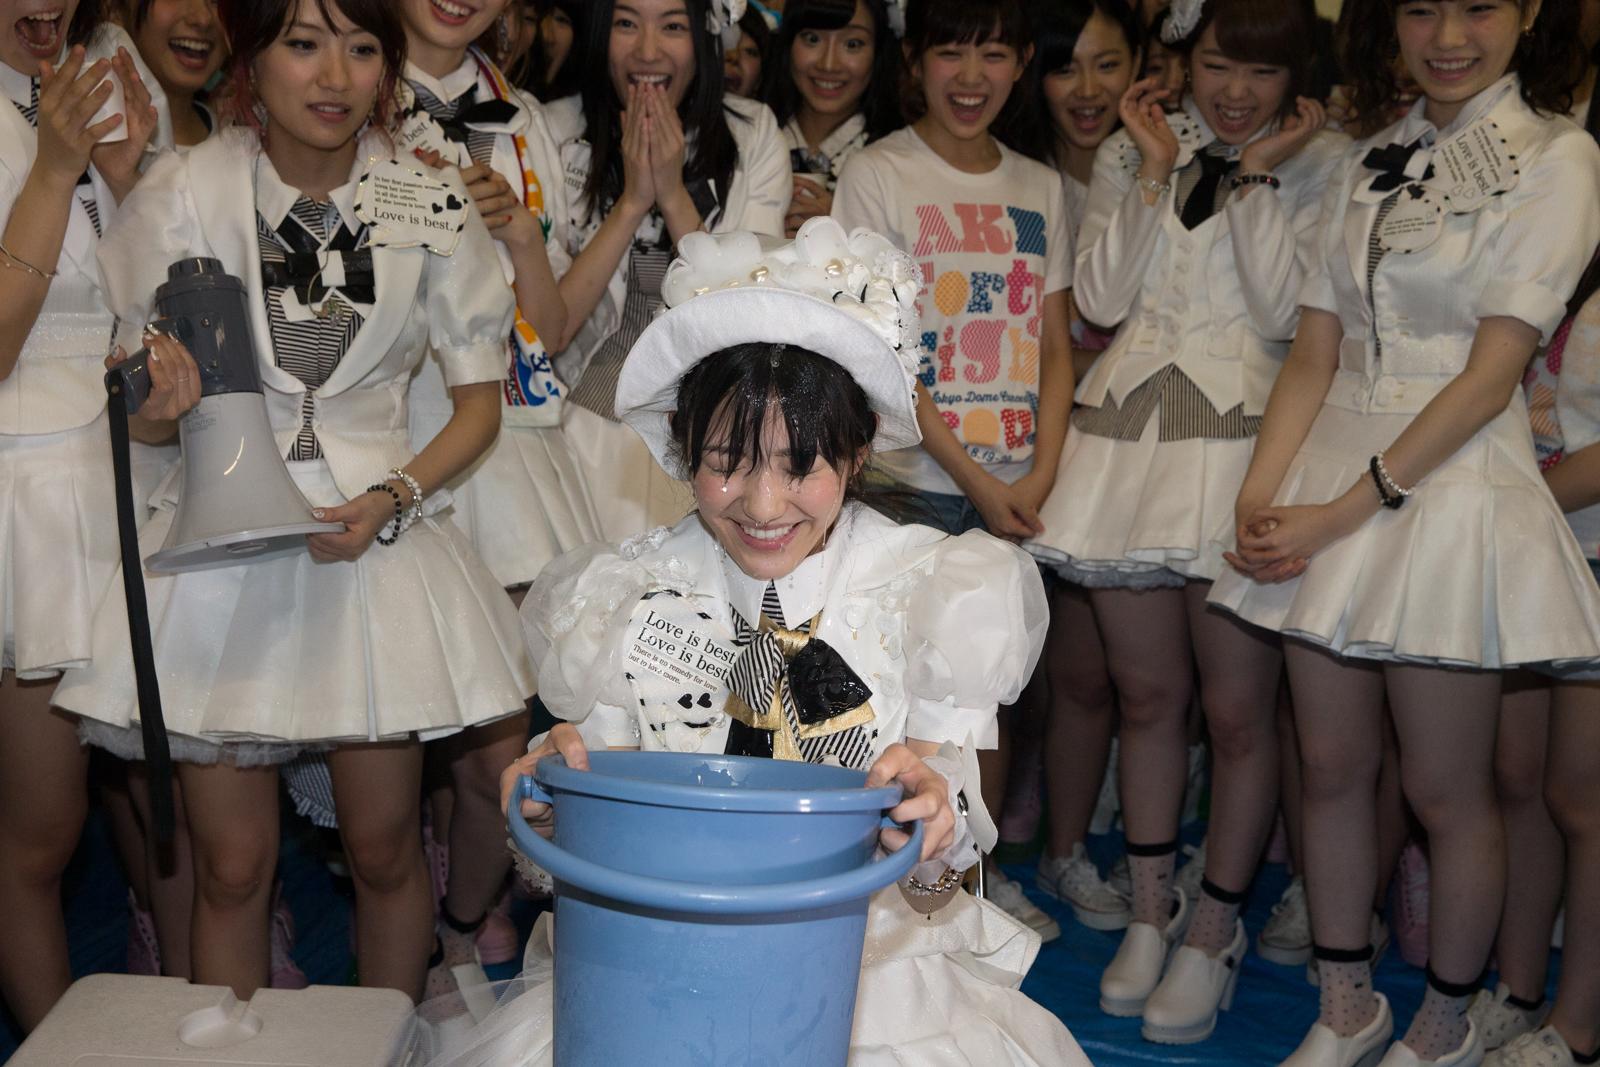 AKB48 Mayu Watanabe and the producer Yasushi Akimoto Do the ALS Ice Bucket Challenge!